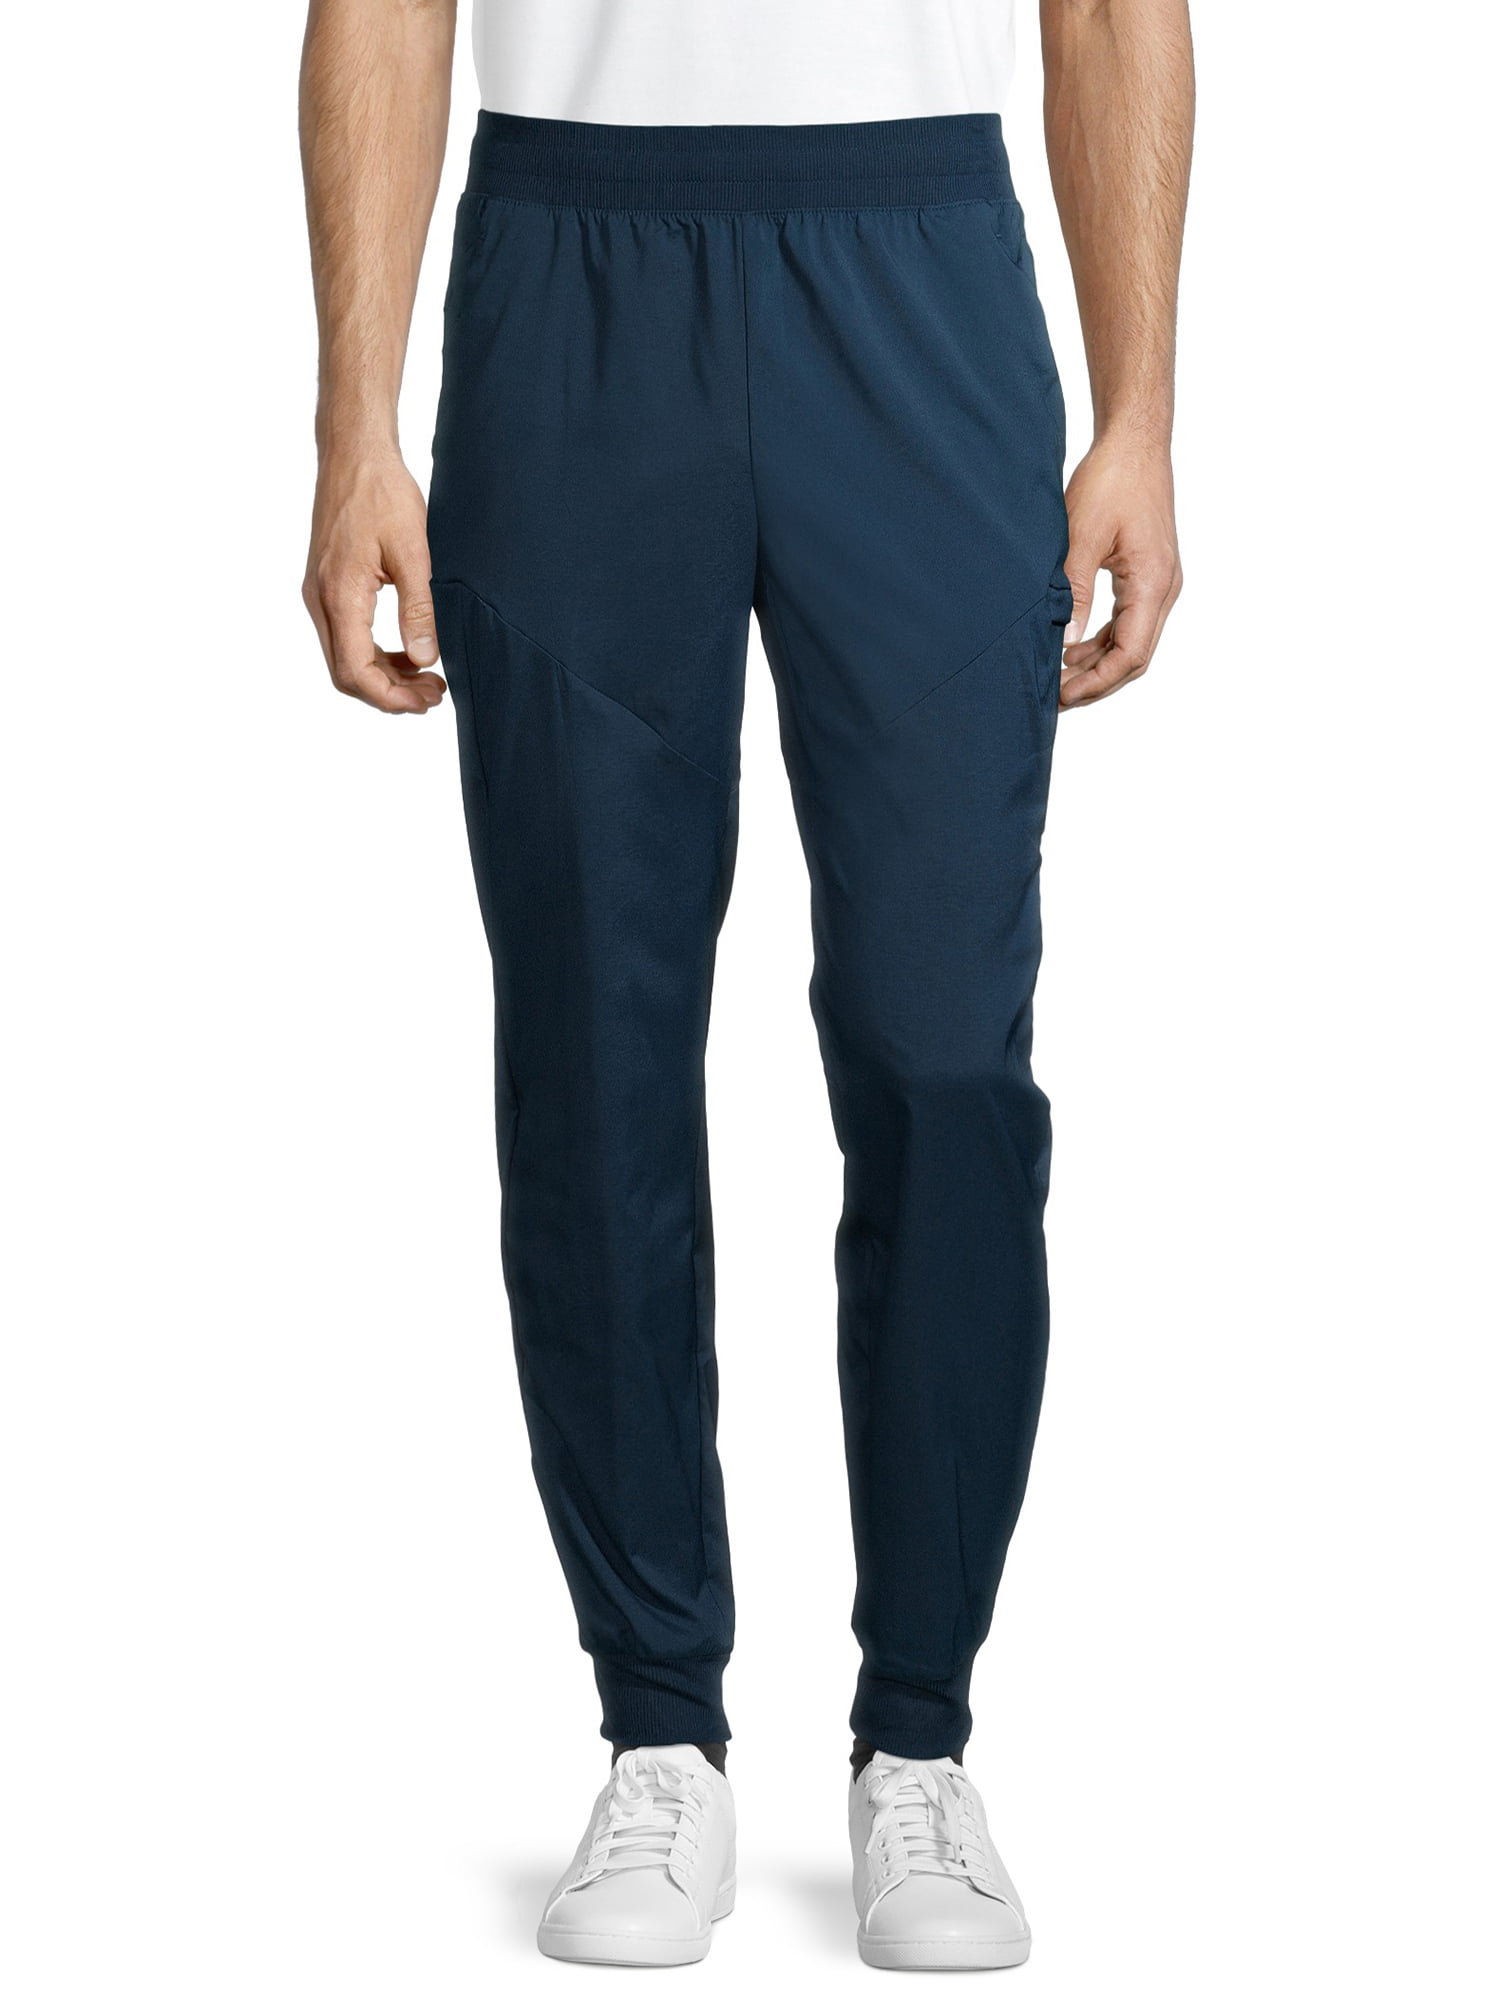 Apana Men's Woven Stretch Cargo Athletic Pants - Walmart.com